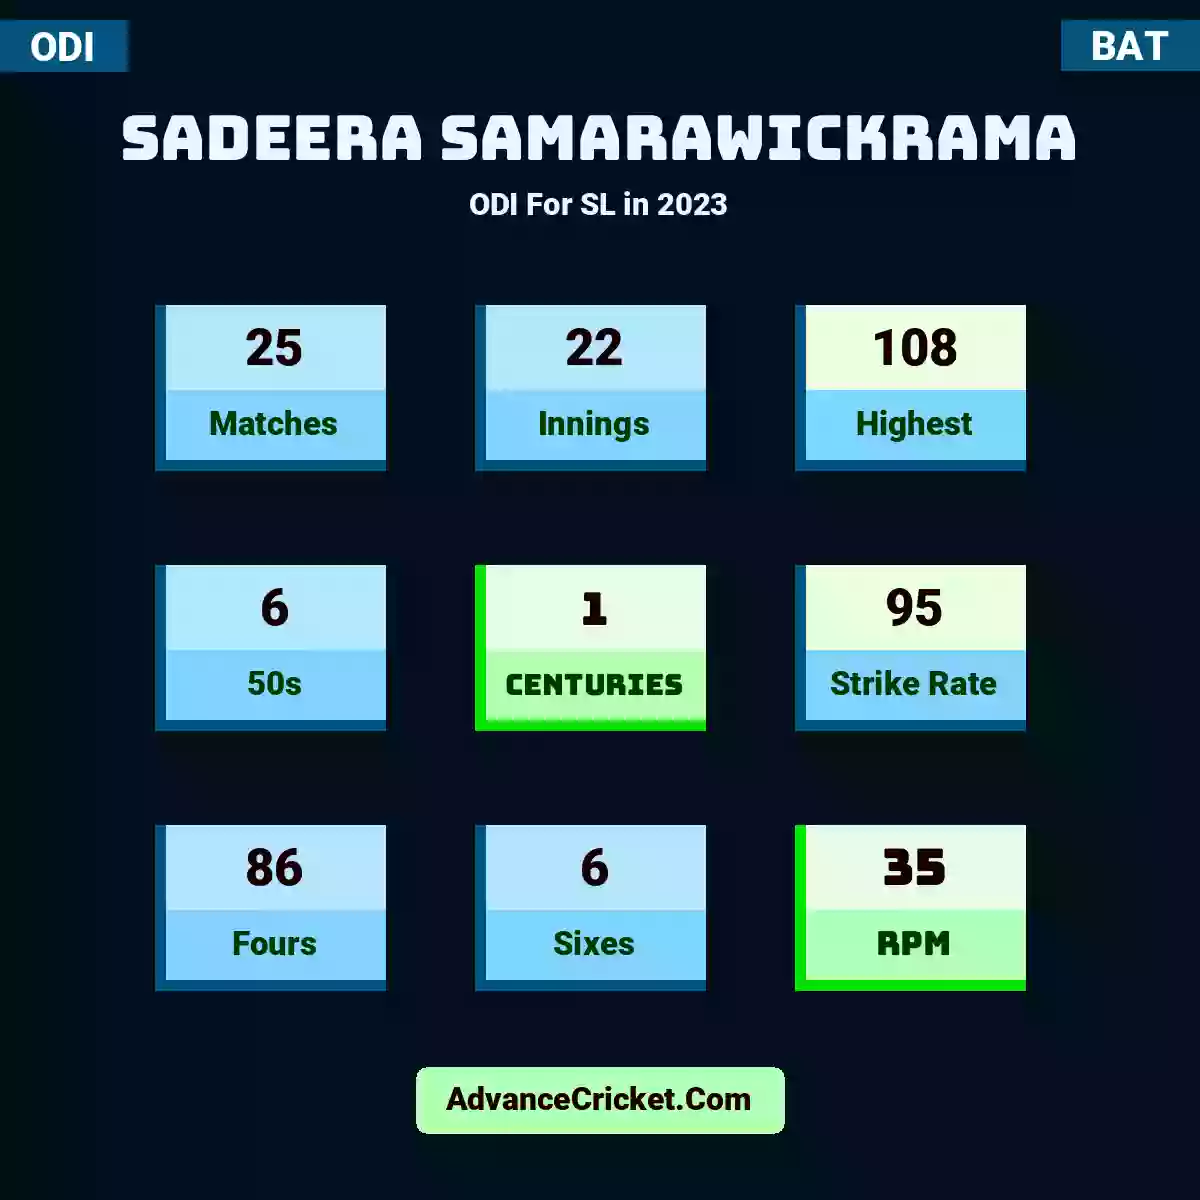 Sadeera Samarawickrama ODI  For SL in 2023, Sadeera Samarawickrama played 25 matches, scored 108 runs as highest, 6 half-centuries, and 1 centuries, with a strike rate of 95. S.Samarawickrama hit 86 fours and 6 sixes, with an RPM of 35.